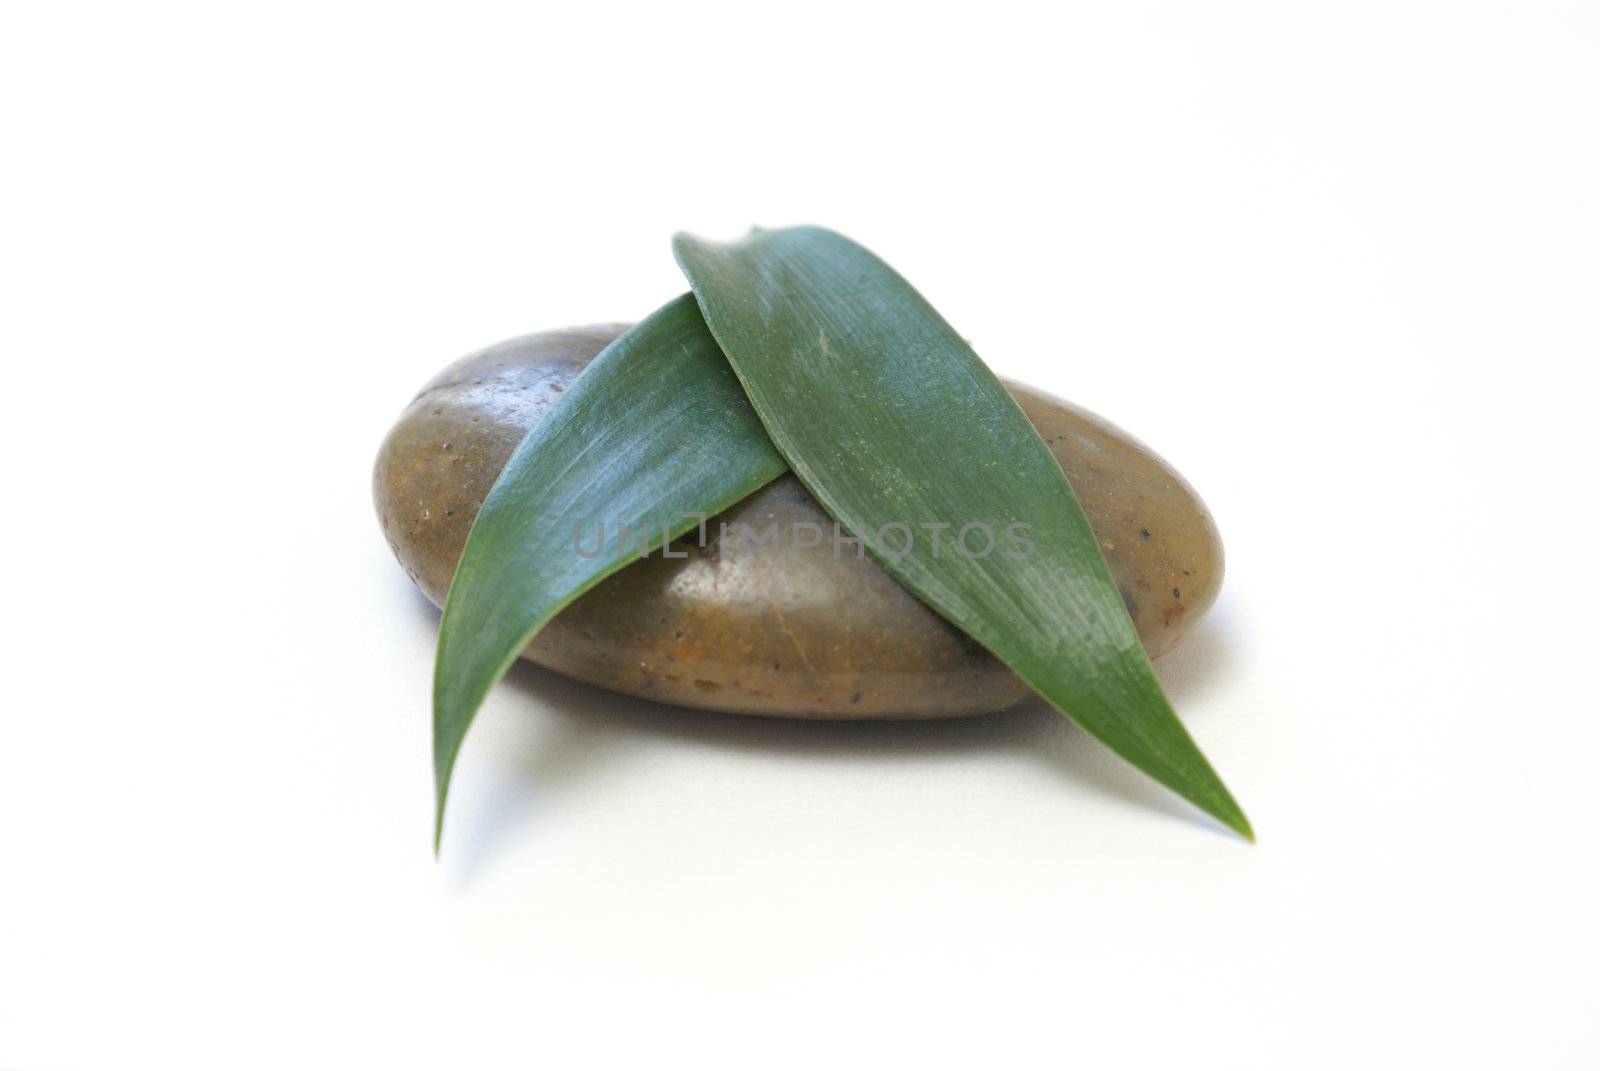 A smooth stone and a fresh green leaf.